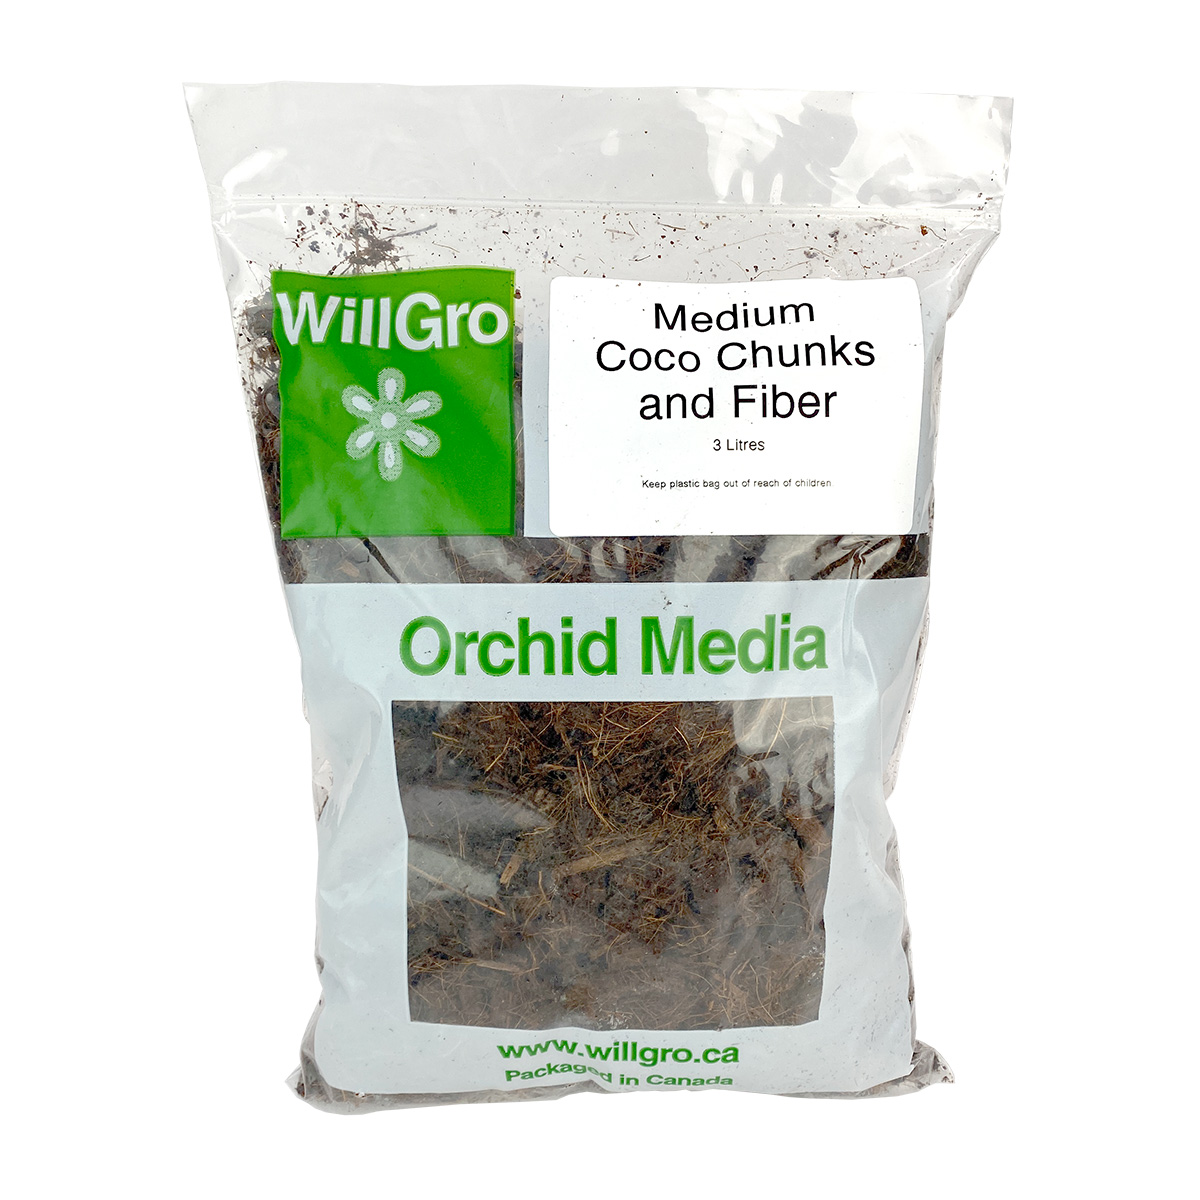 Willgro Medium Coco Chunks and Fiber 3L